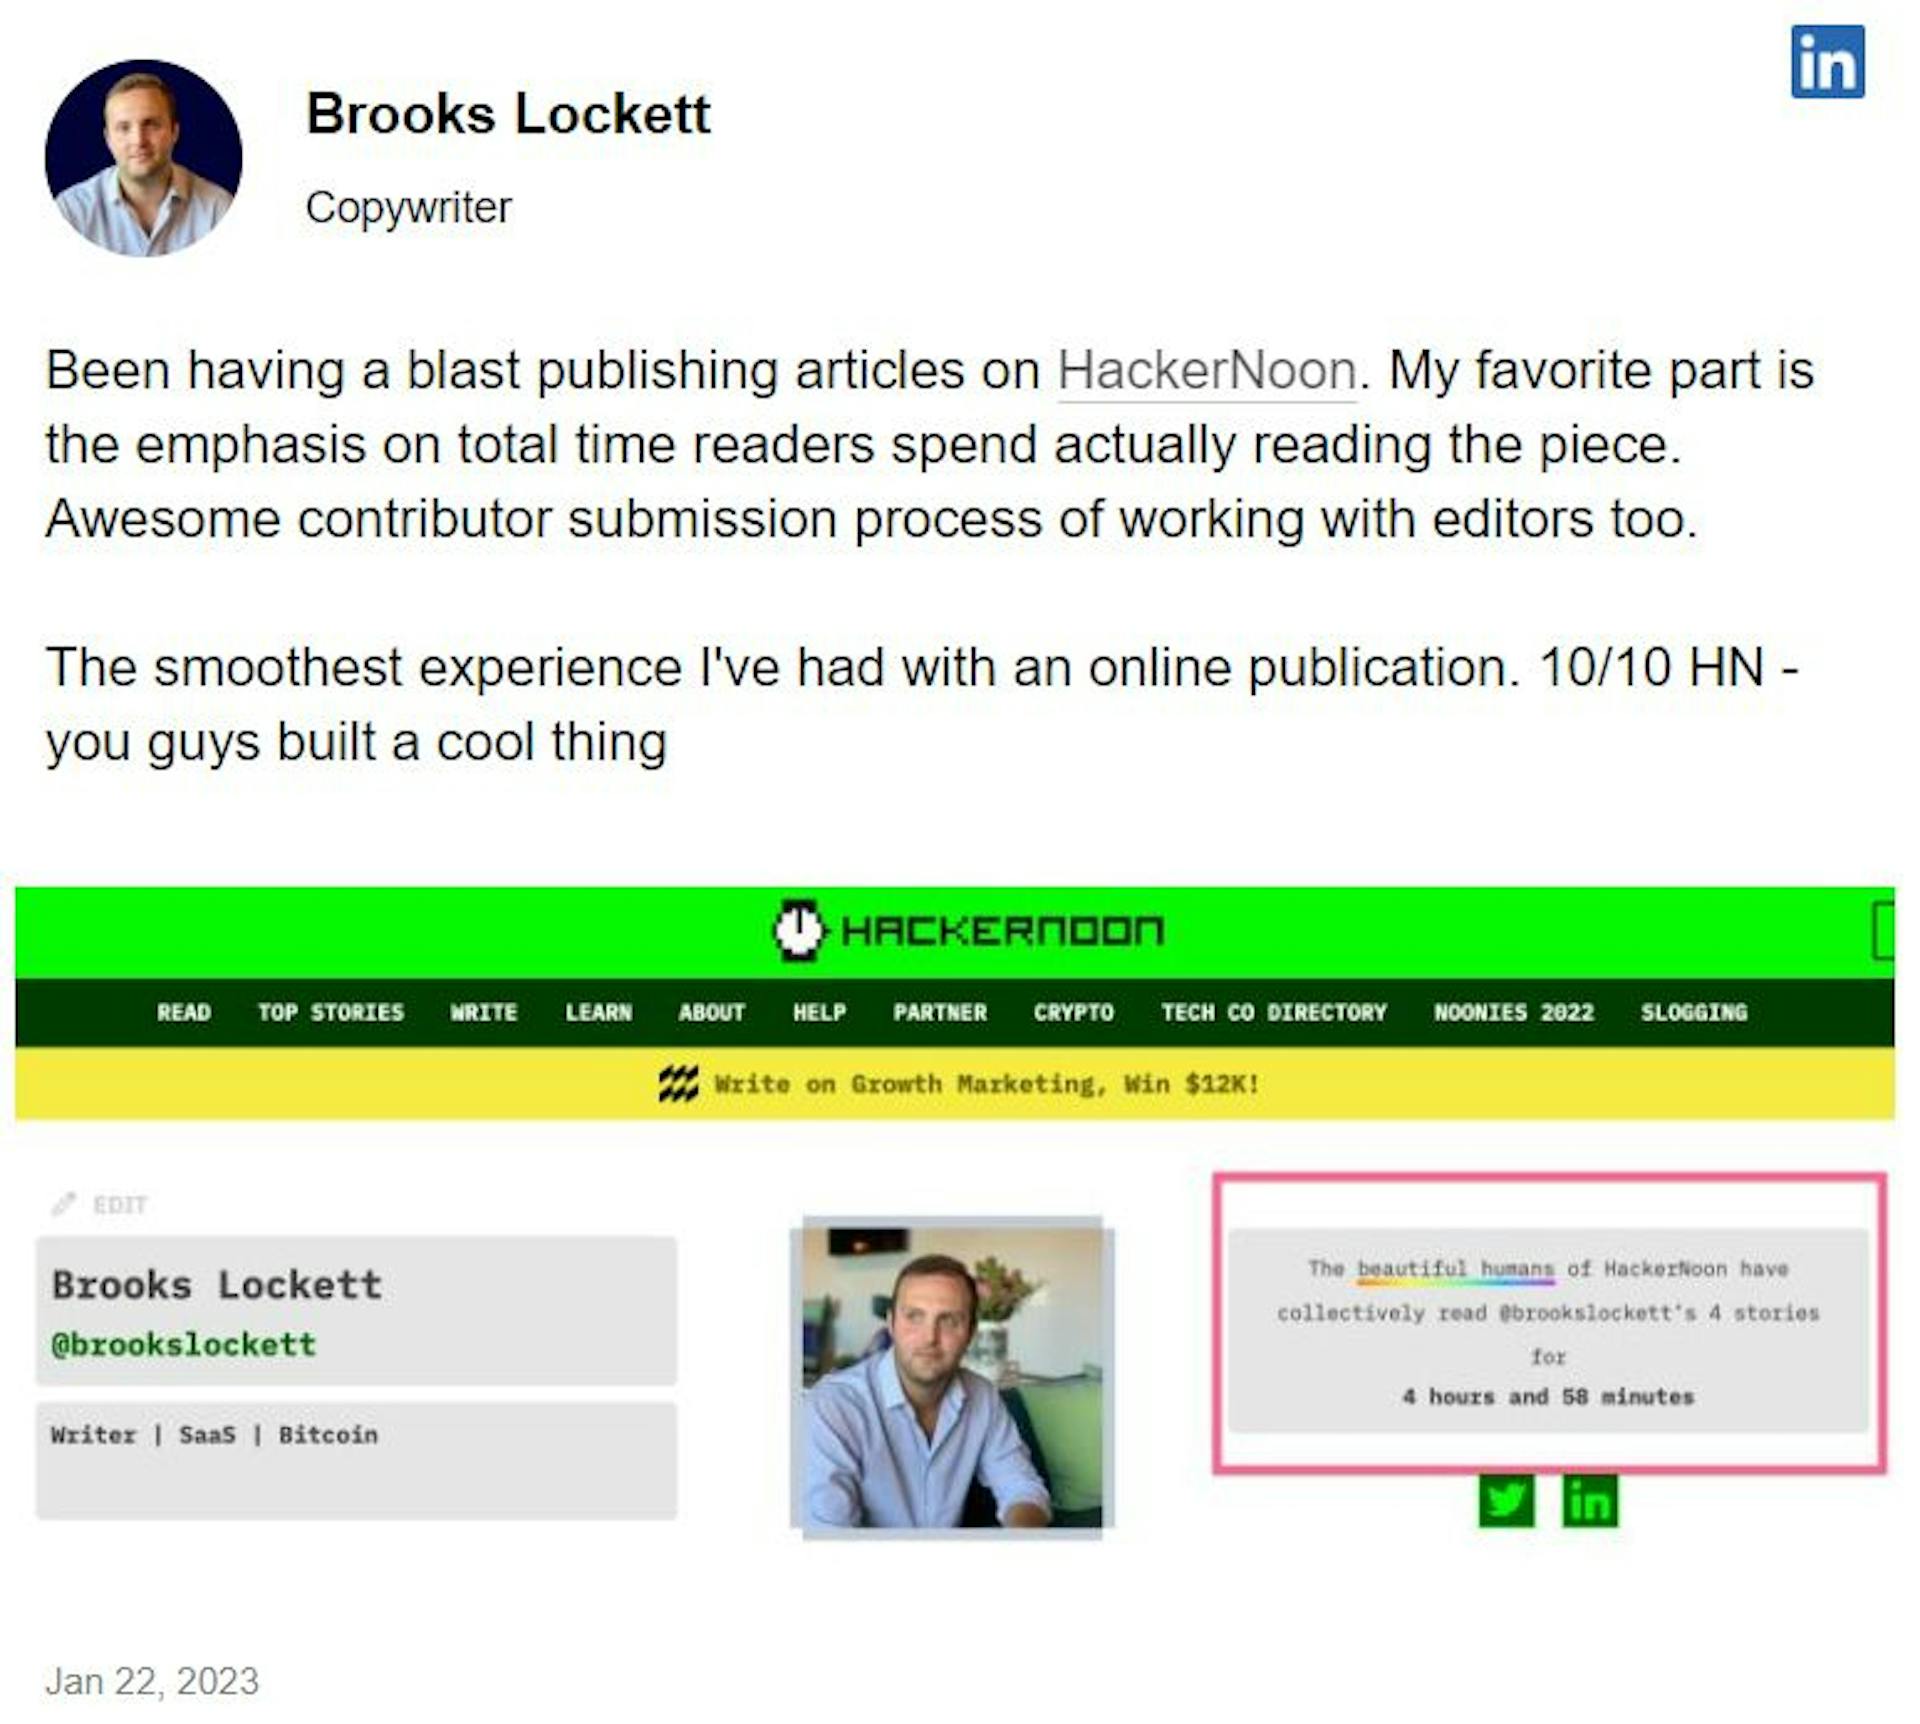 Témoignage de Brooks Lockett sur HackerNoon, janvier 2023.